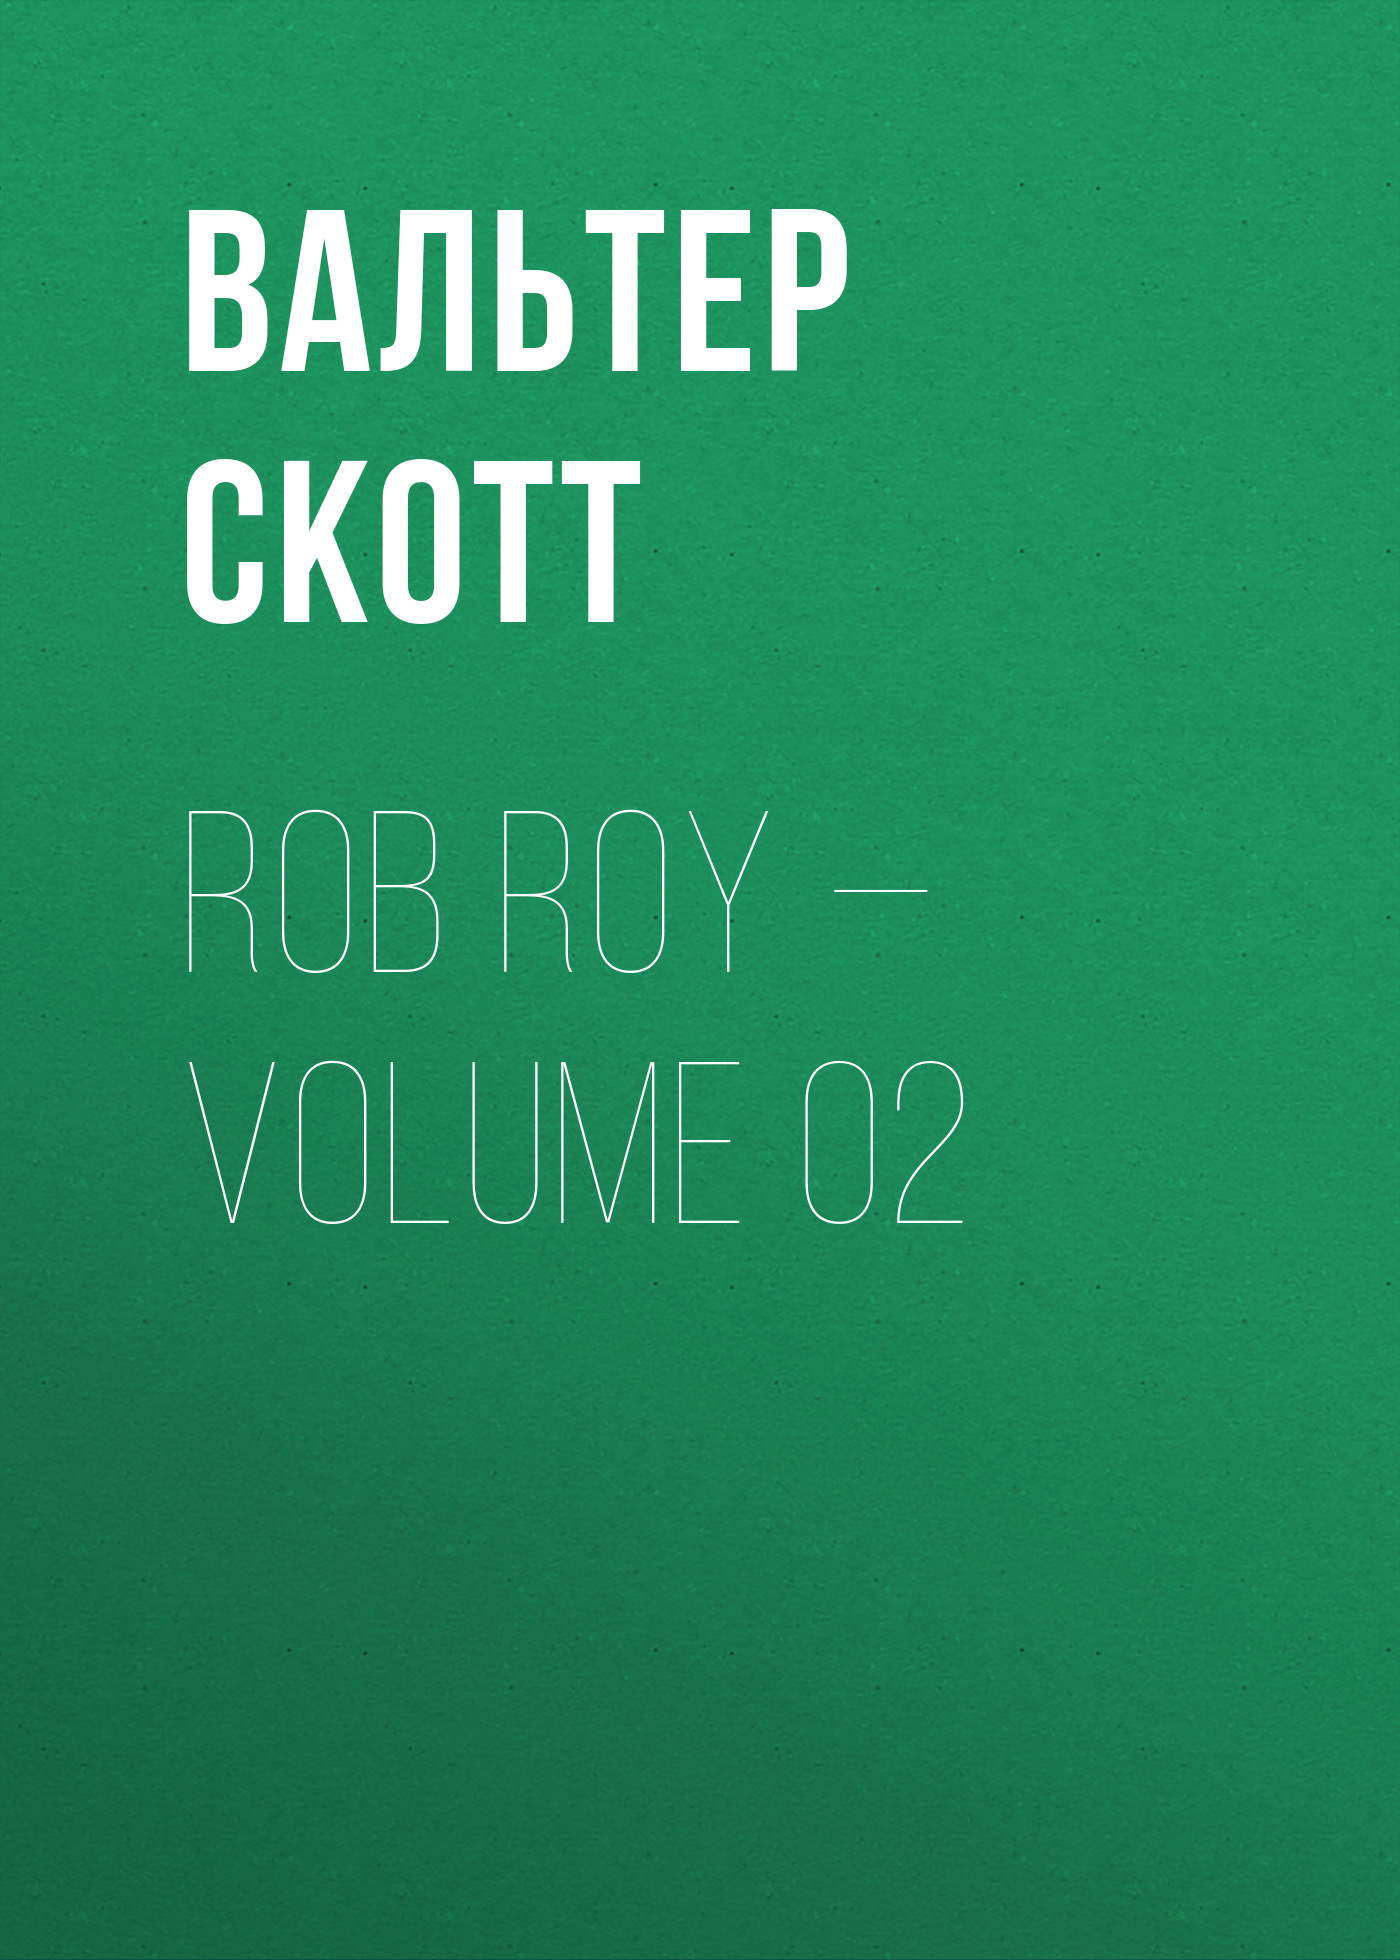 Rob Roy— Volume 02